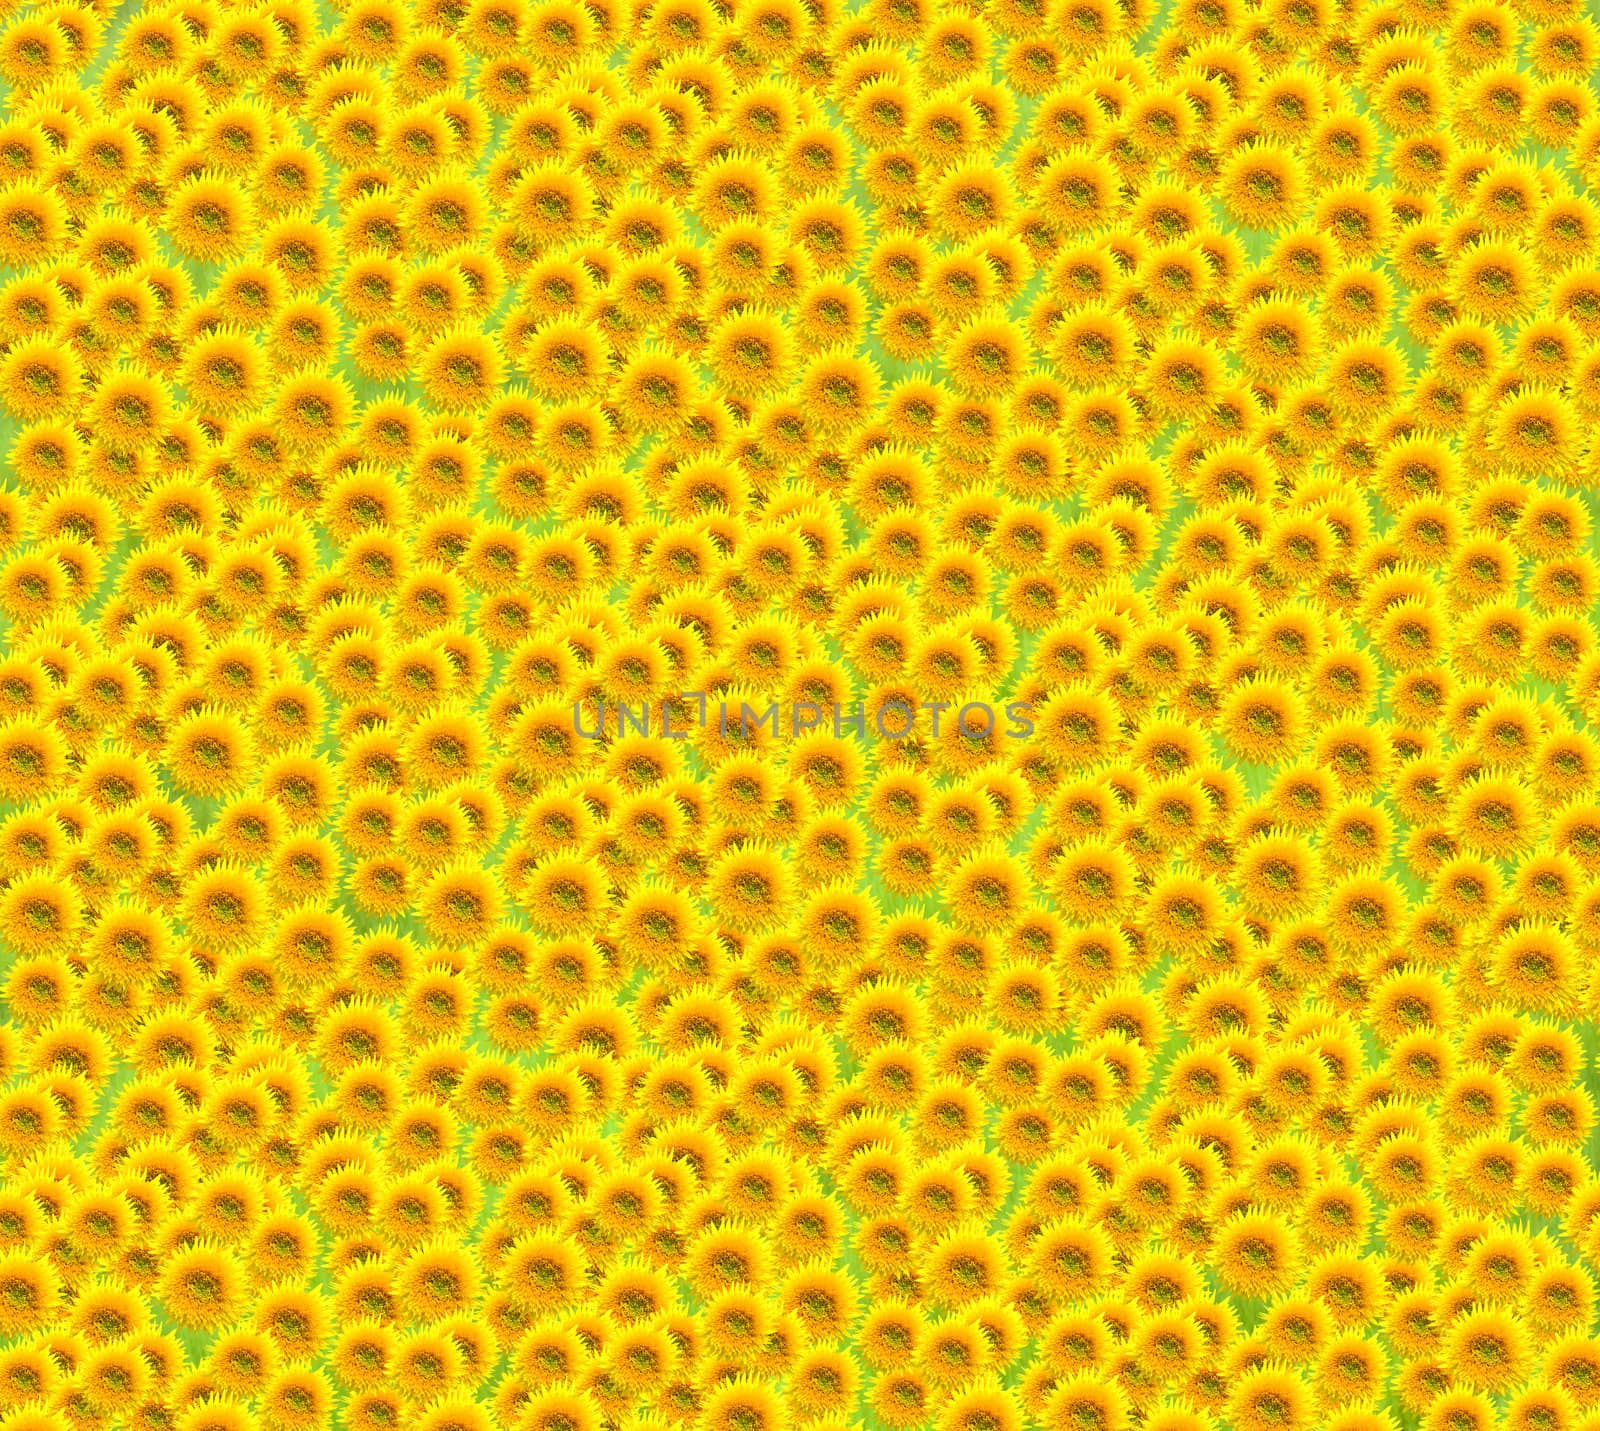 Sunflower background by domencolja